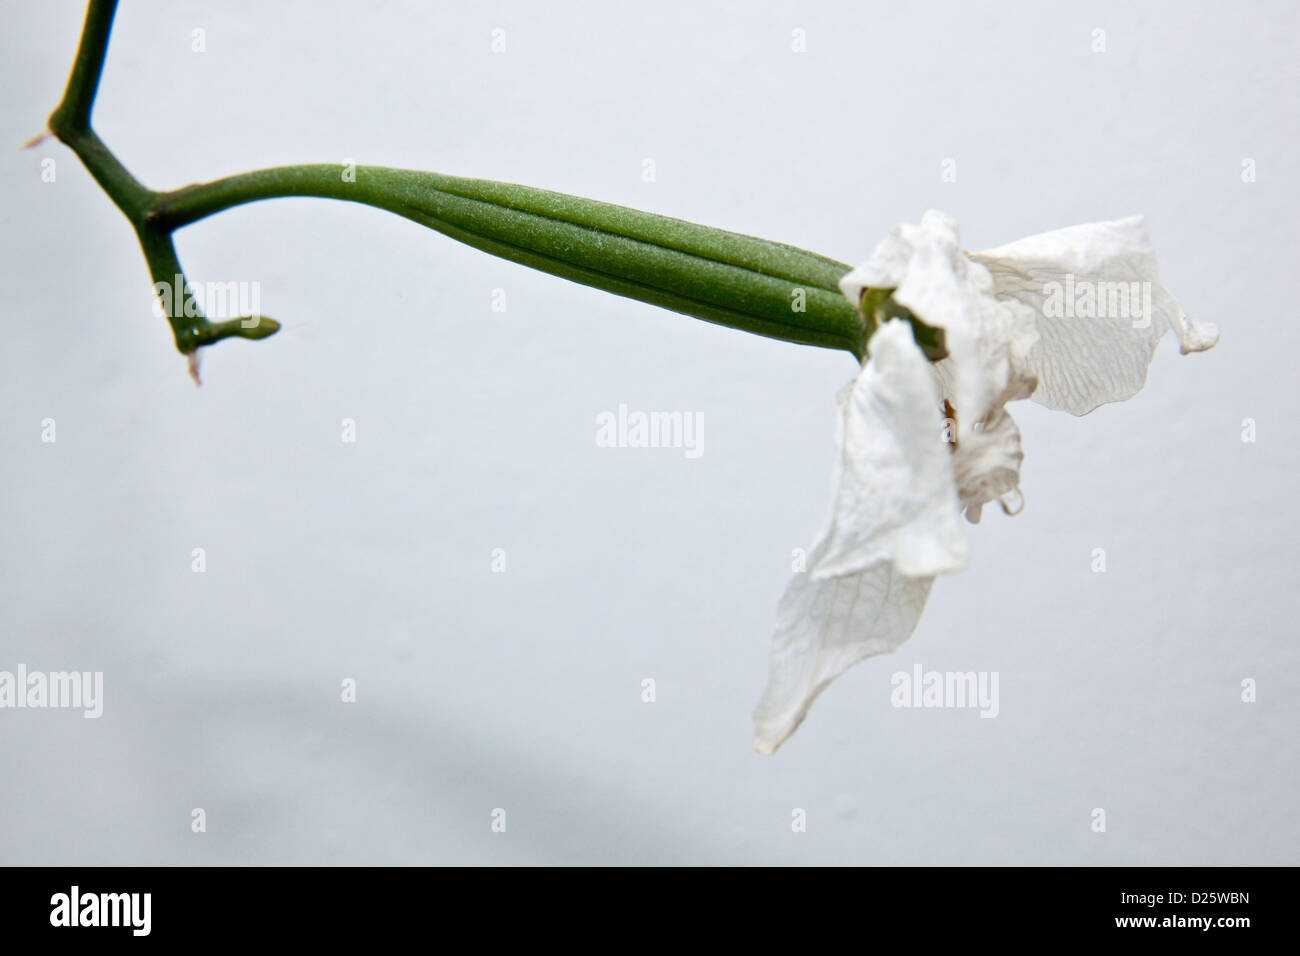 Phalaenopsis orchid seed pod Stock Photo